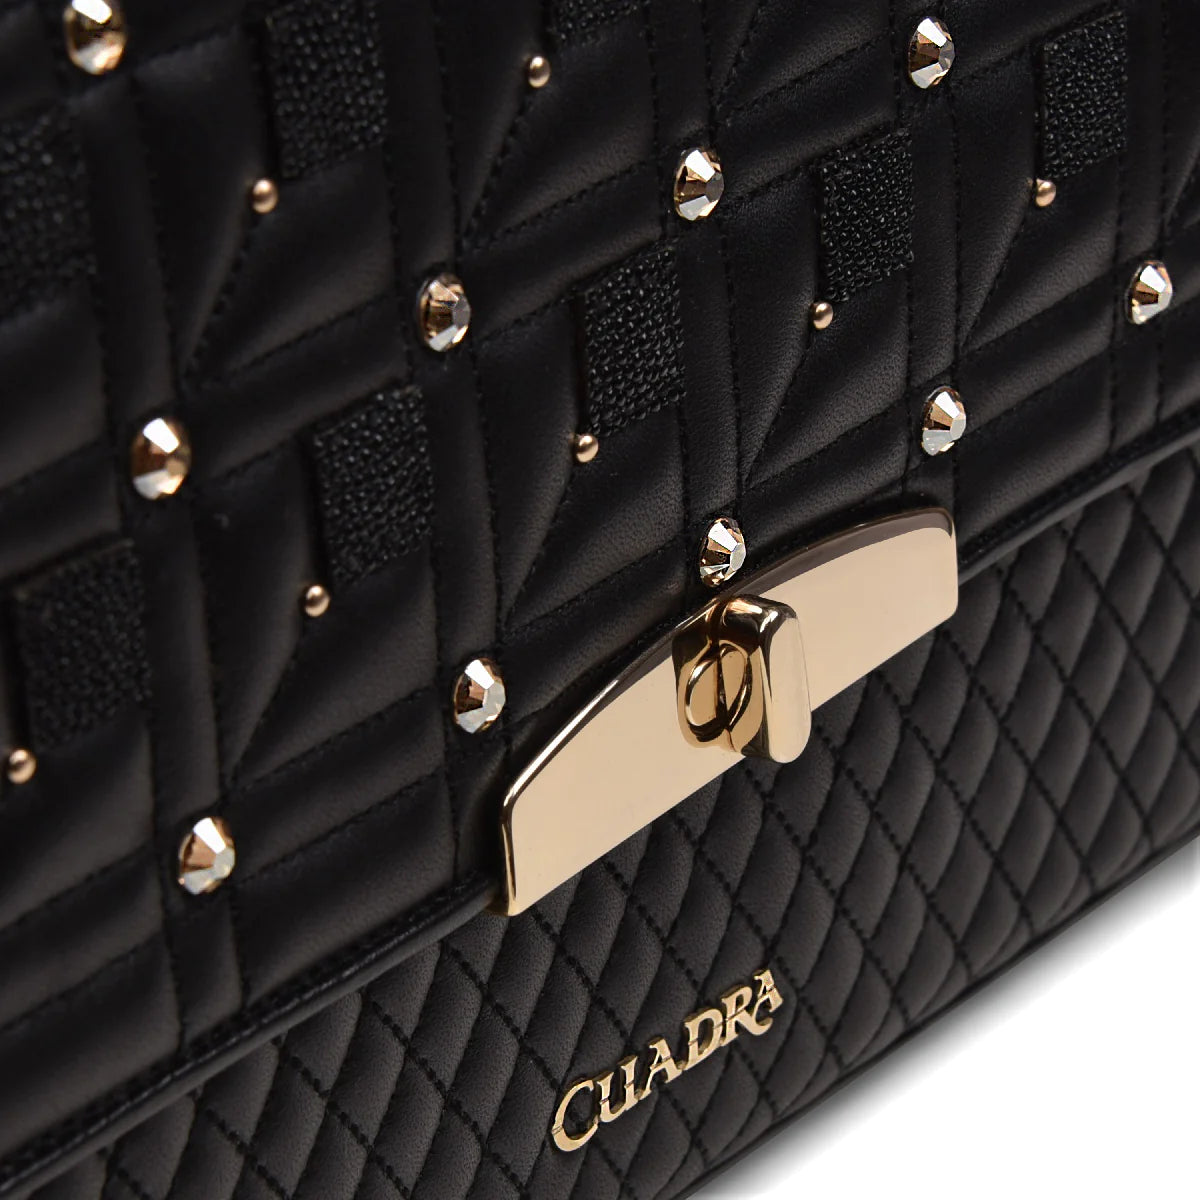 Cuadra Black Exotic Leather Handbag